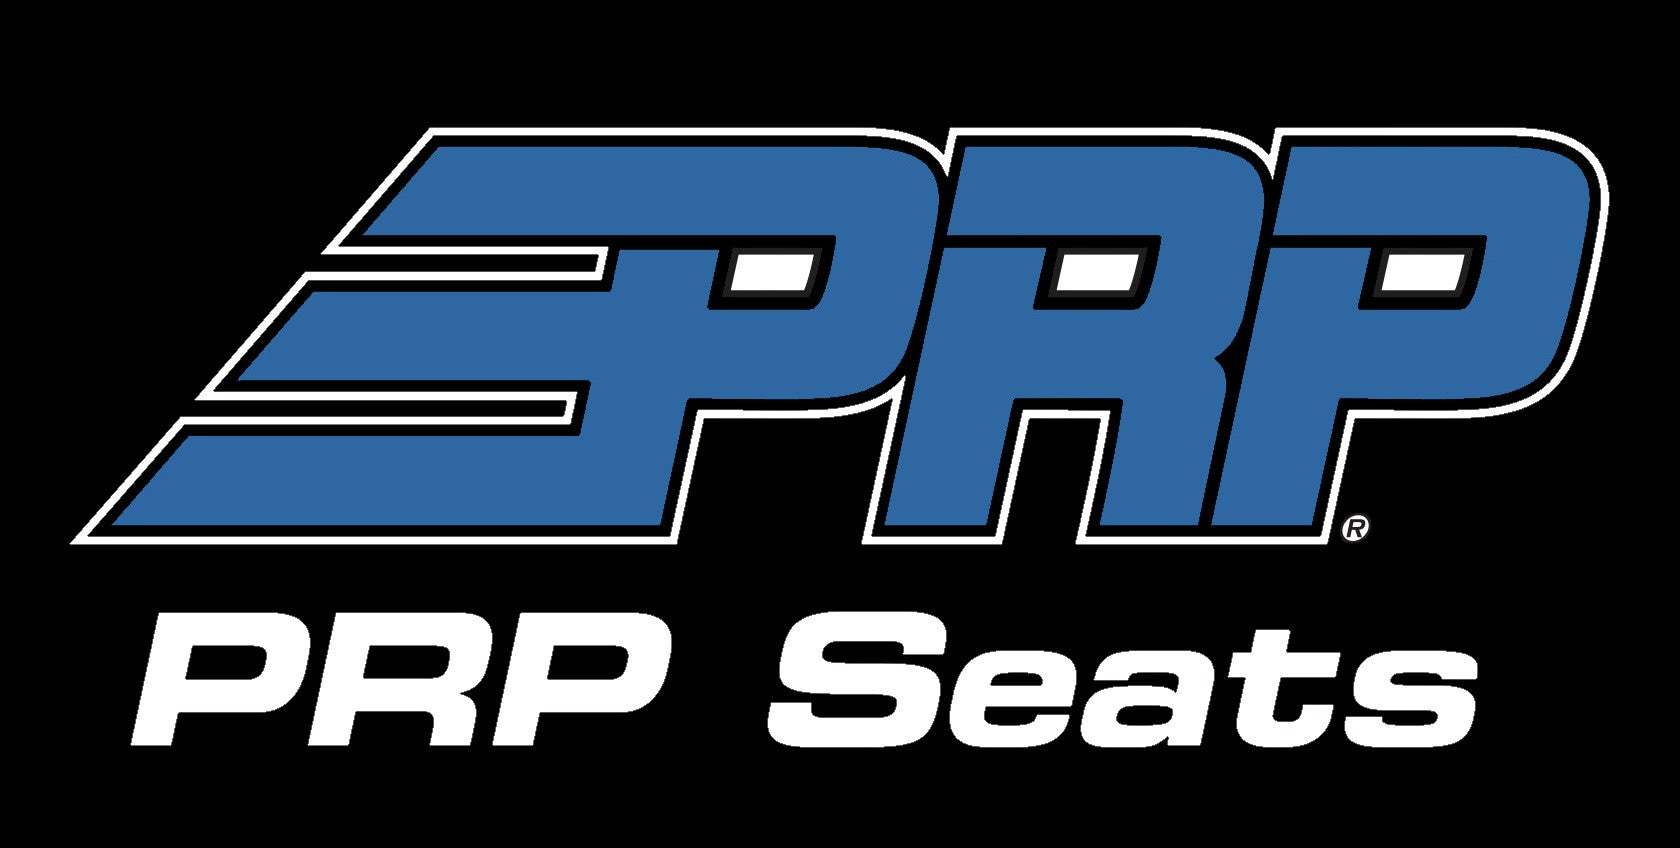 PRP SEATS